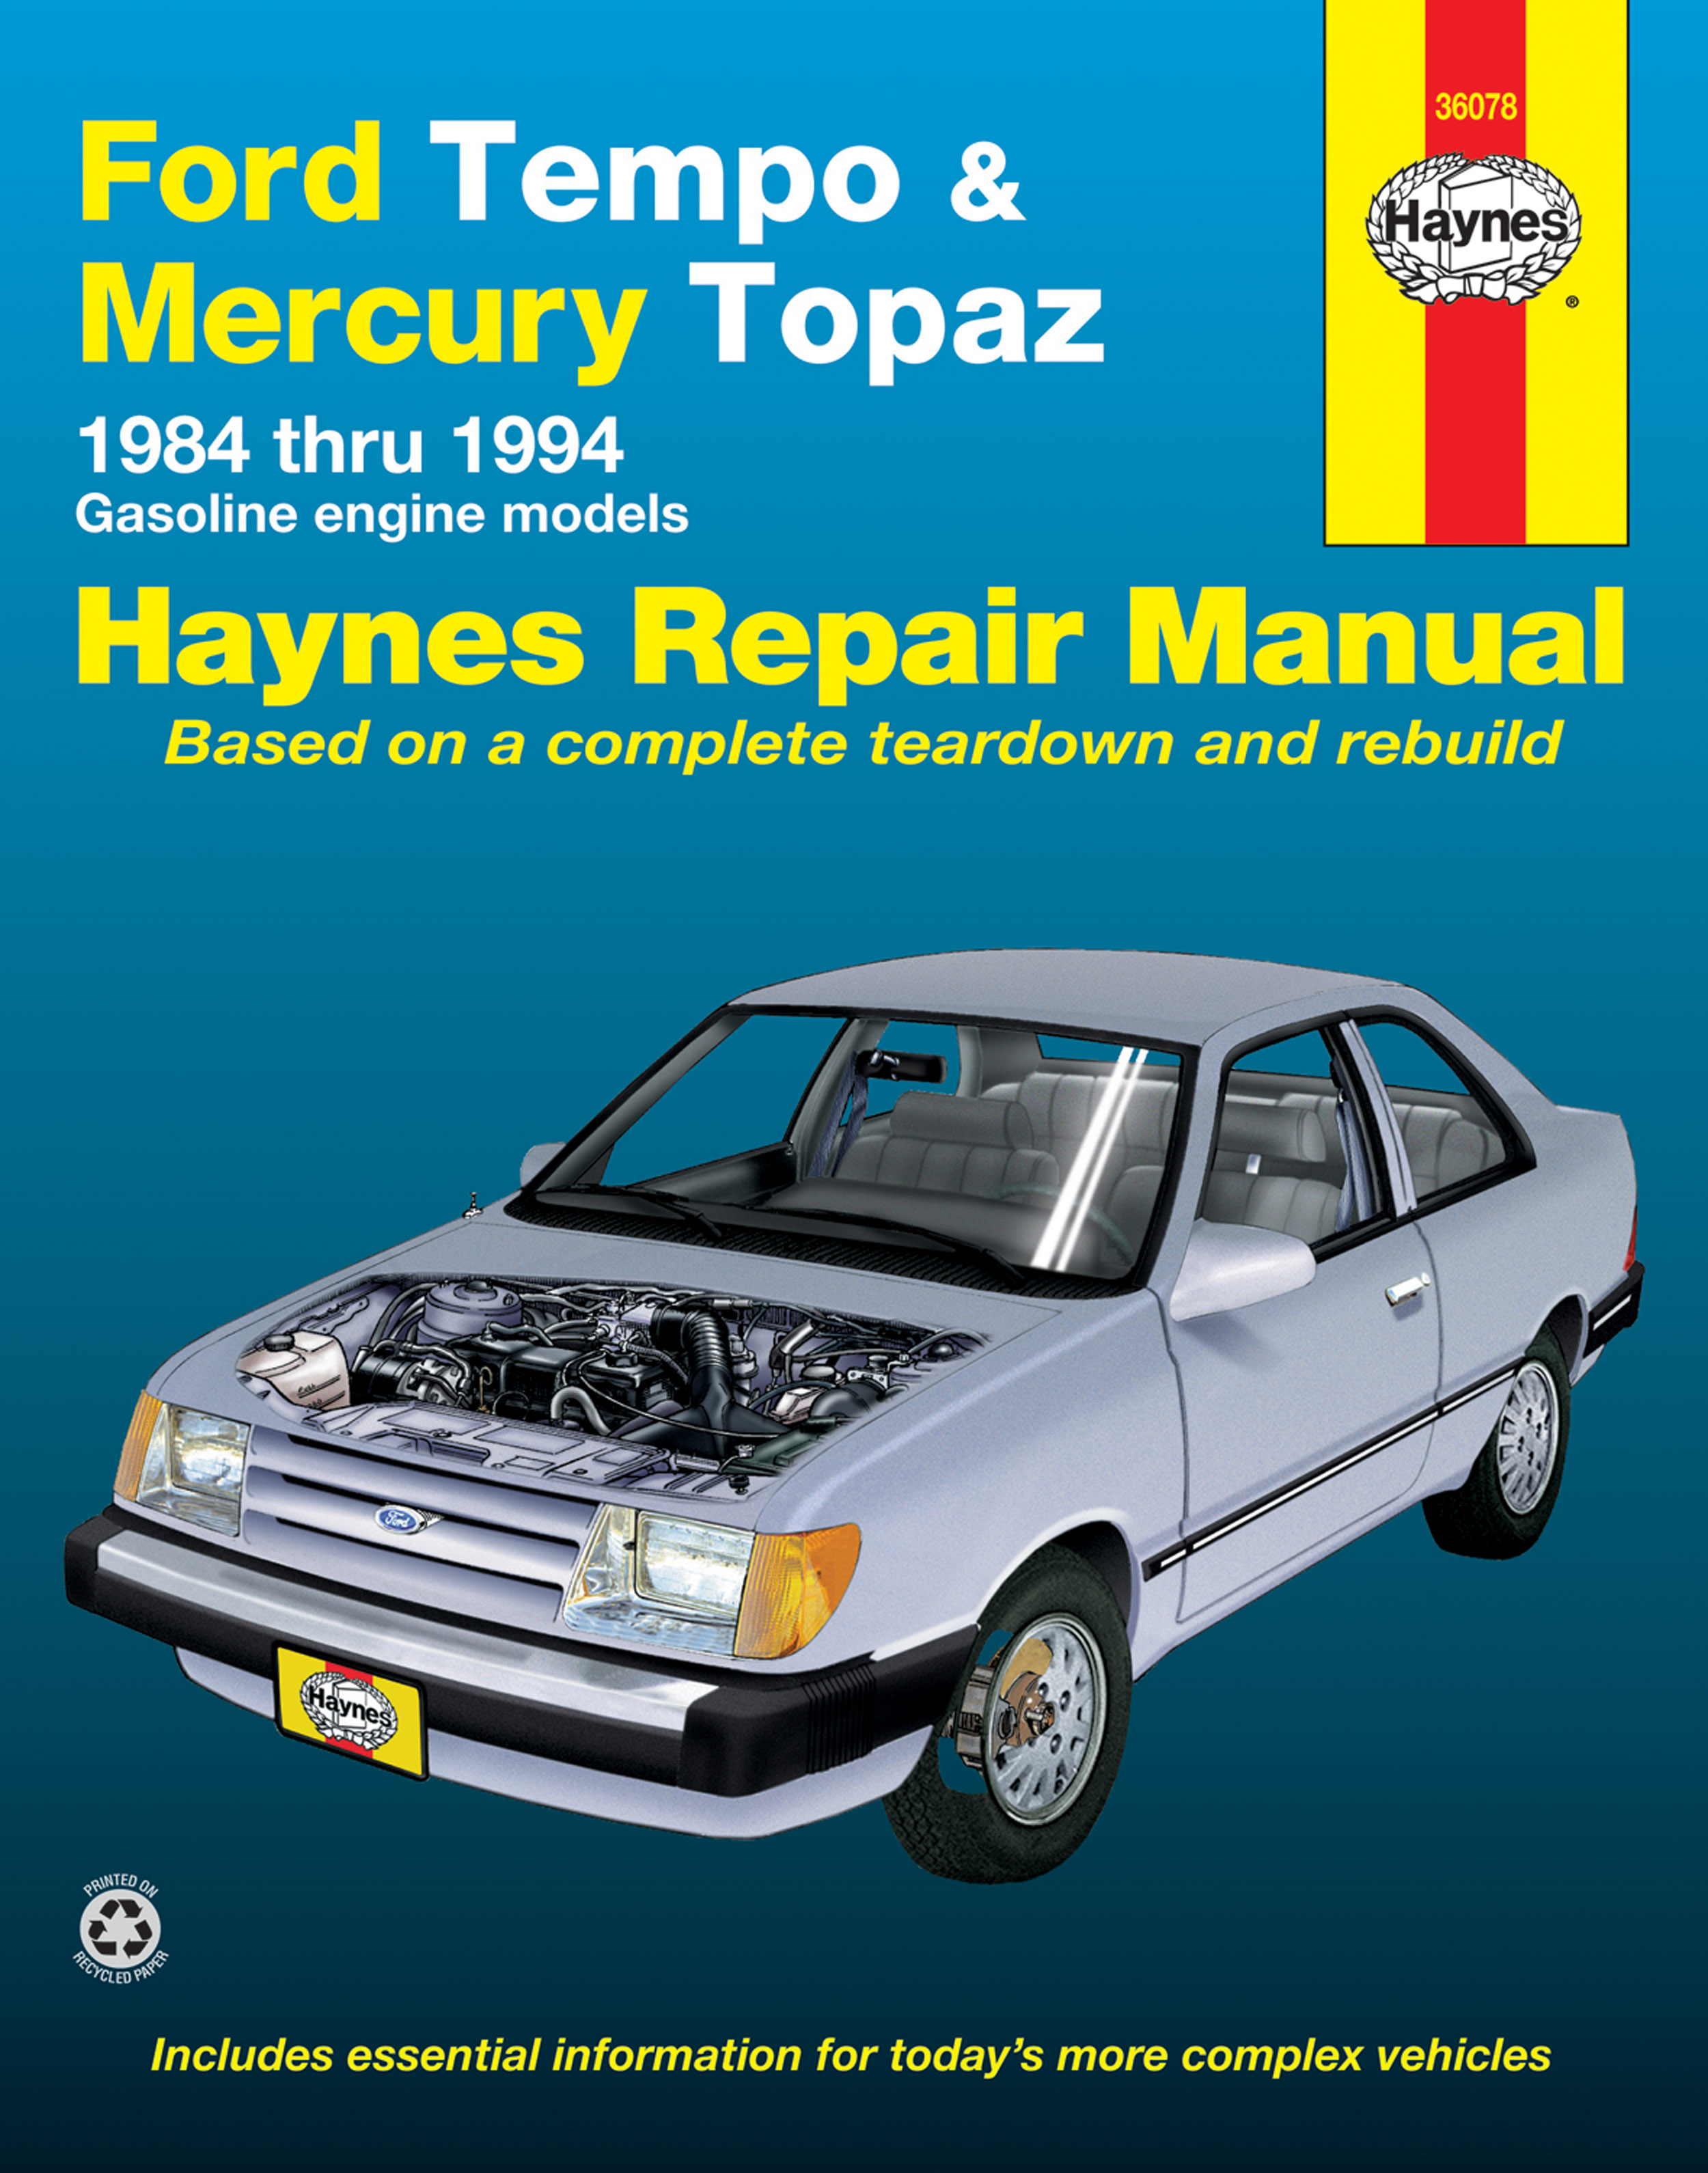 Ford Tempo & Mercury Topaz all 2WD Gas Engine (84-94) Haynes Repair Manual